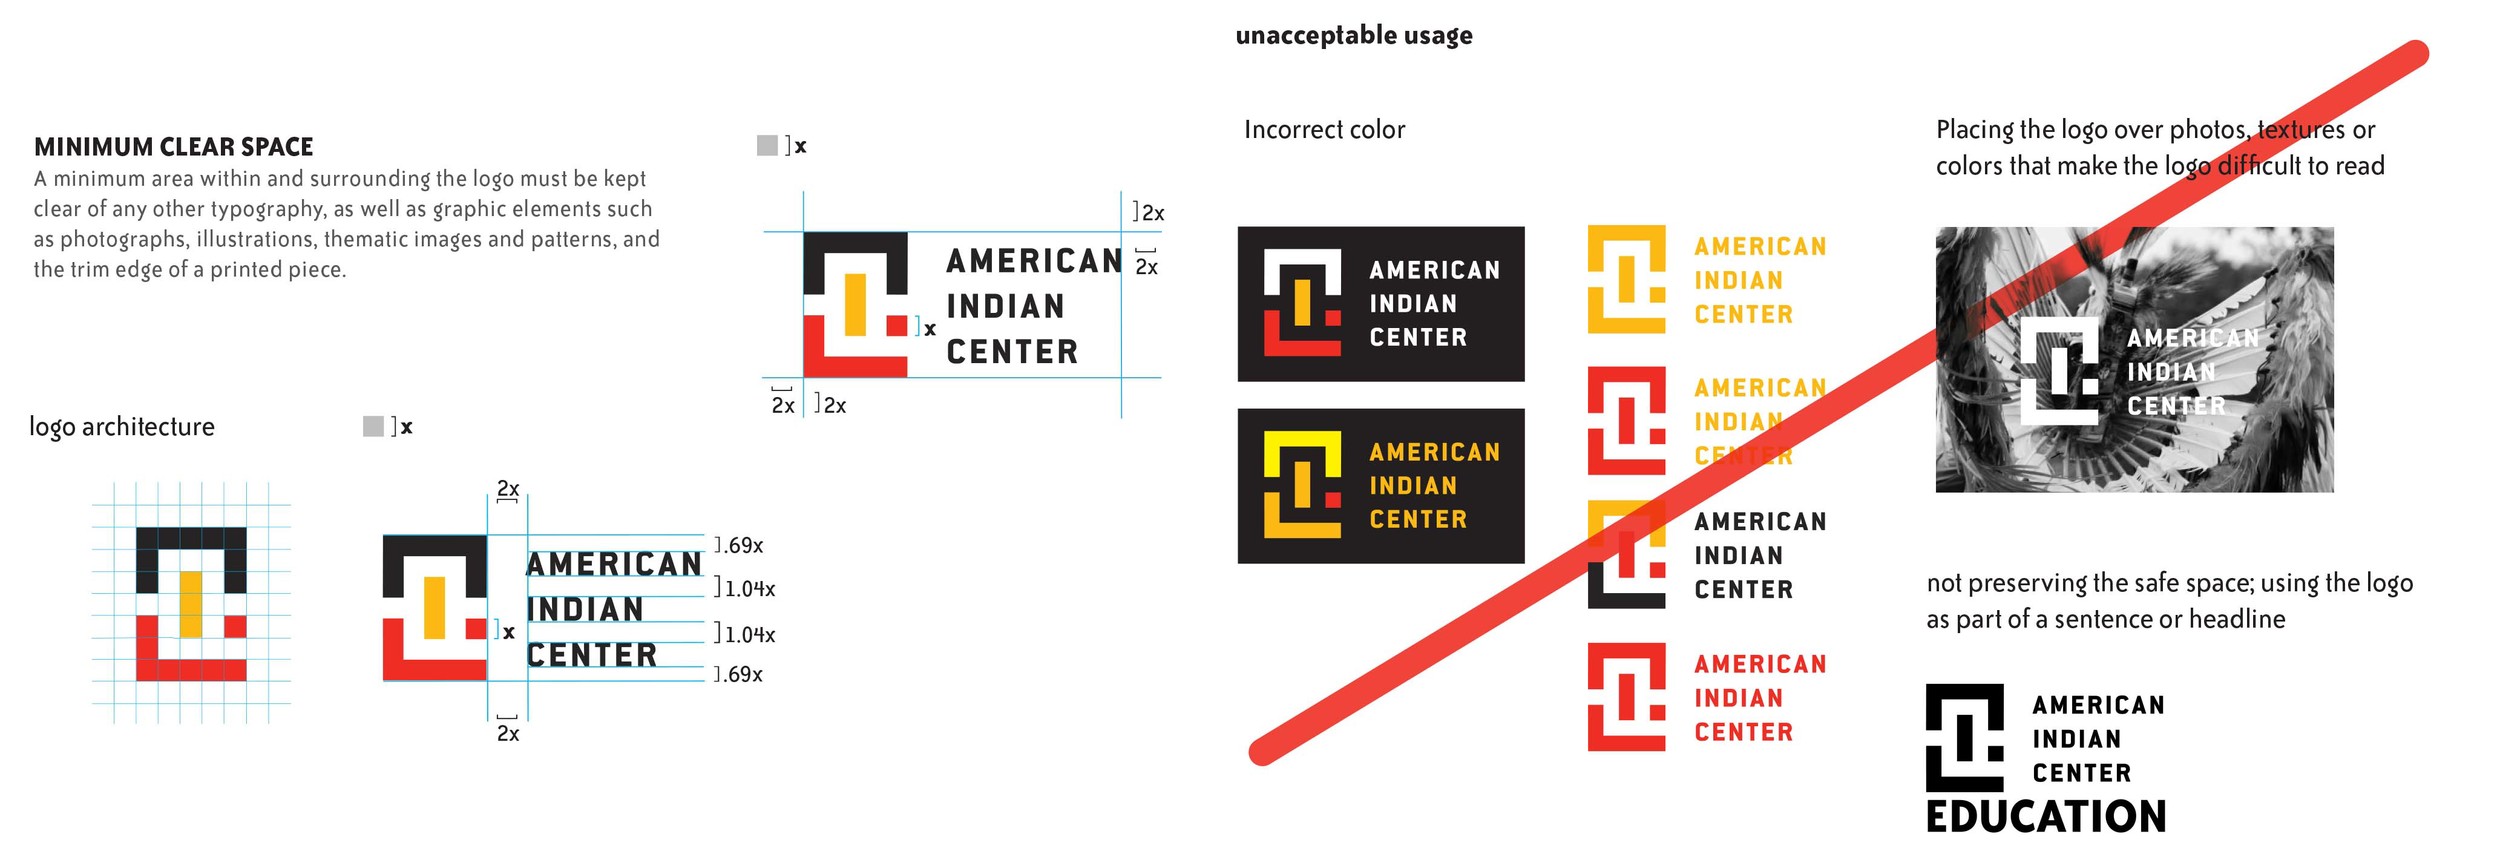 American Indian Center rebrand